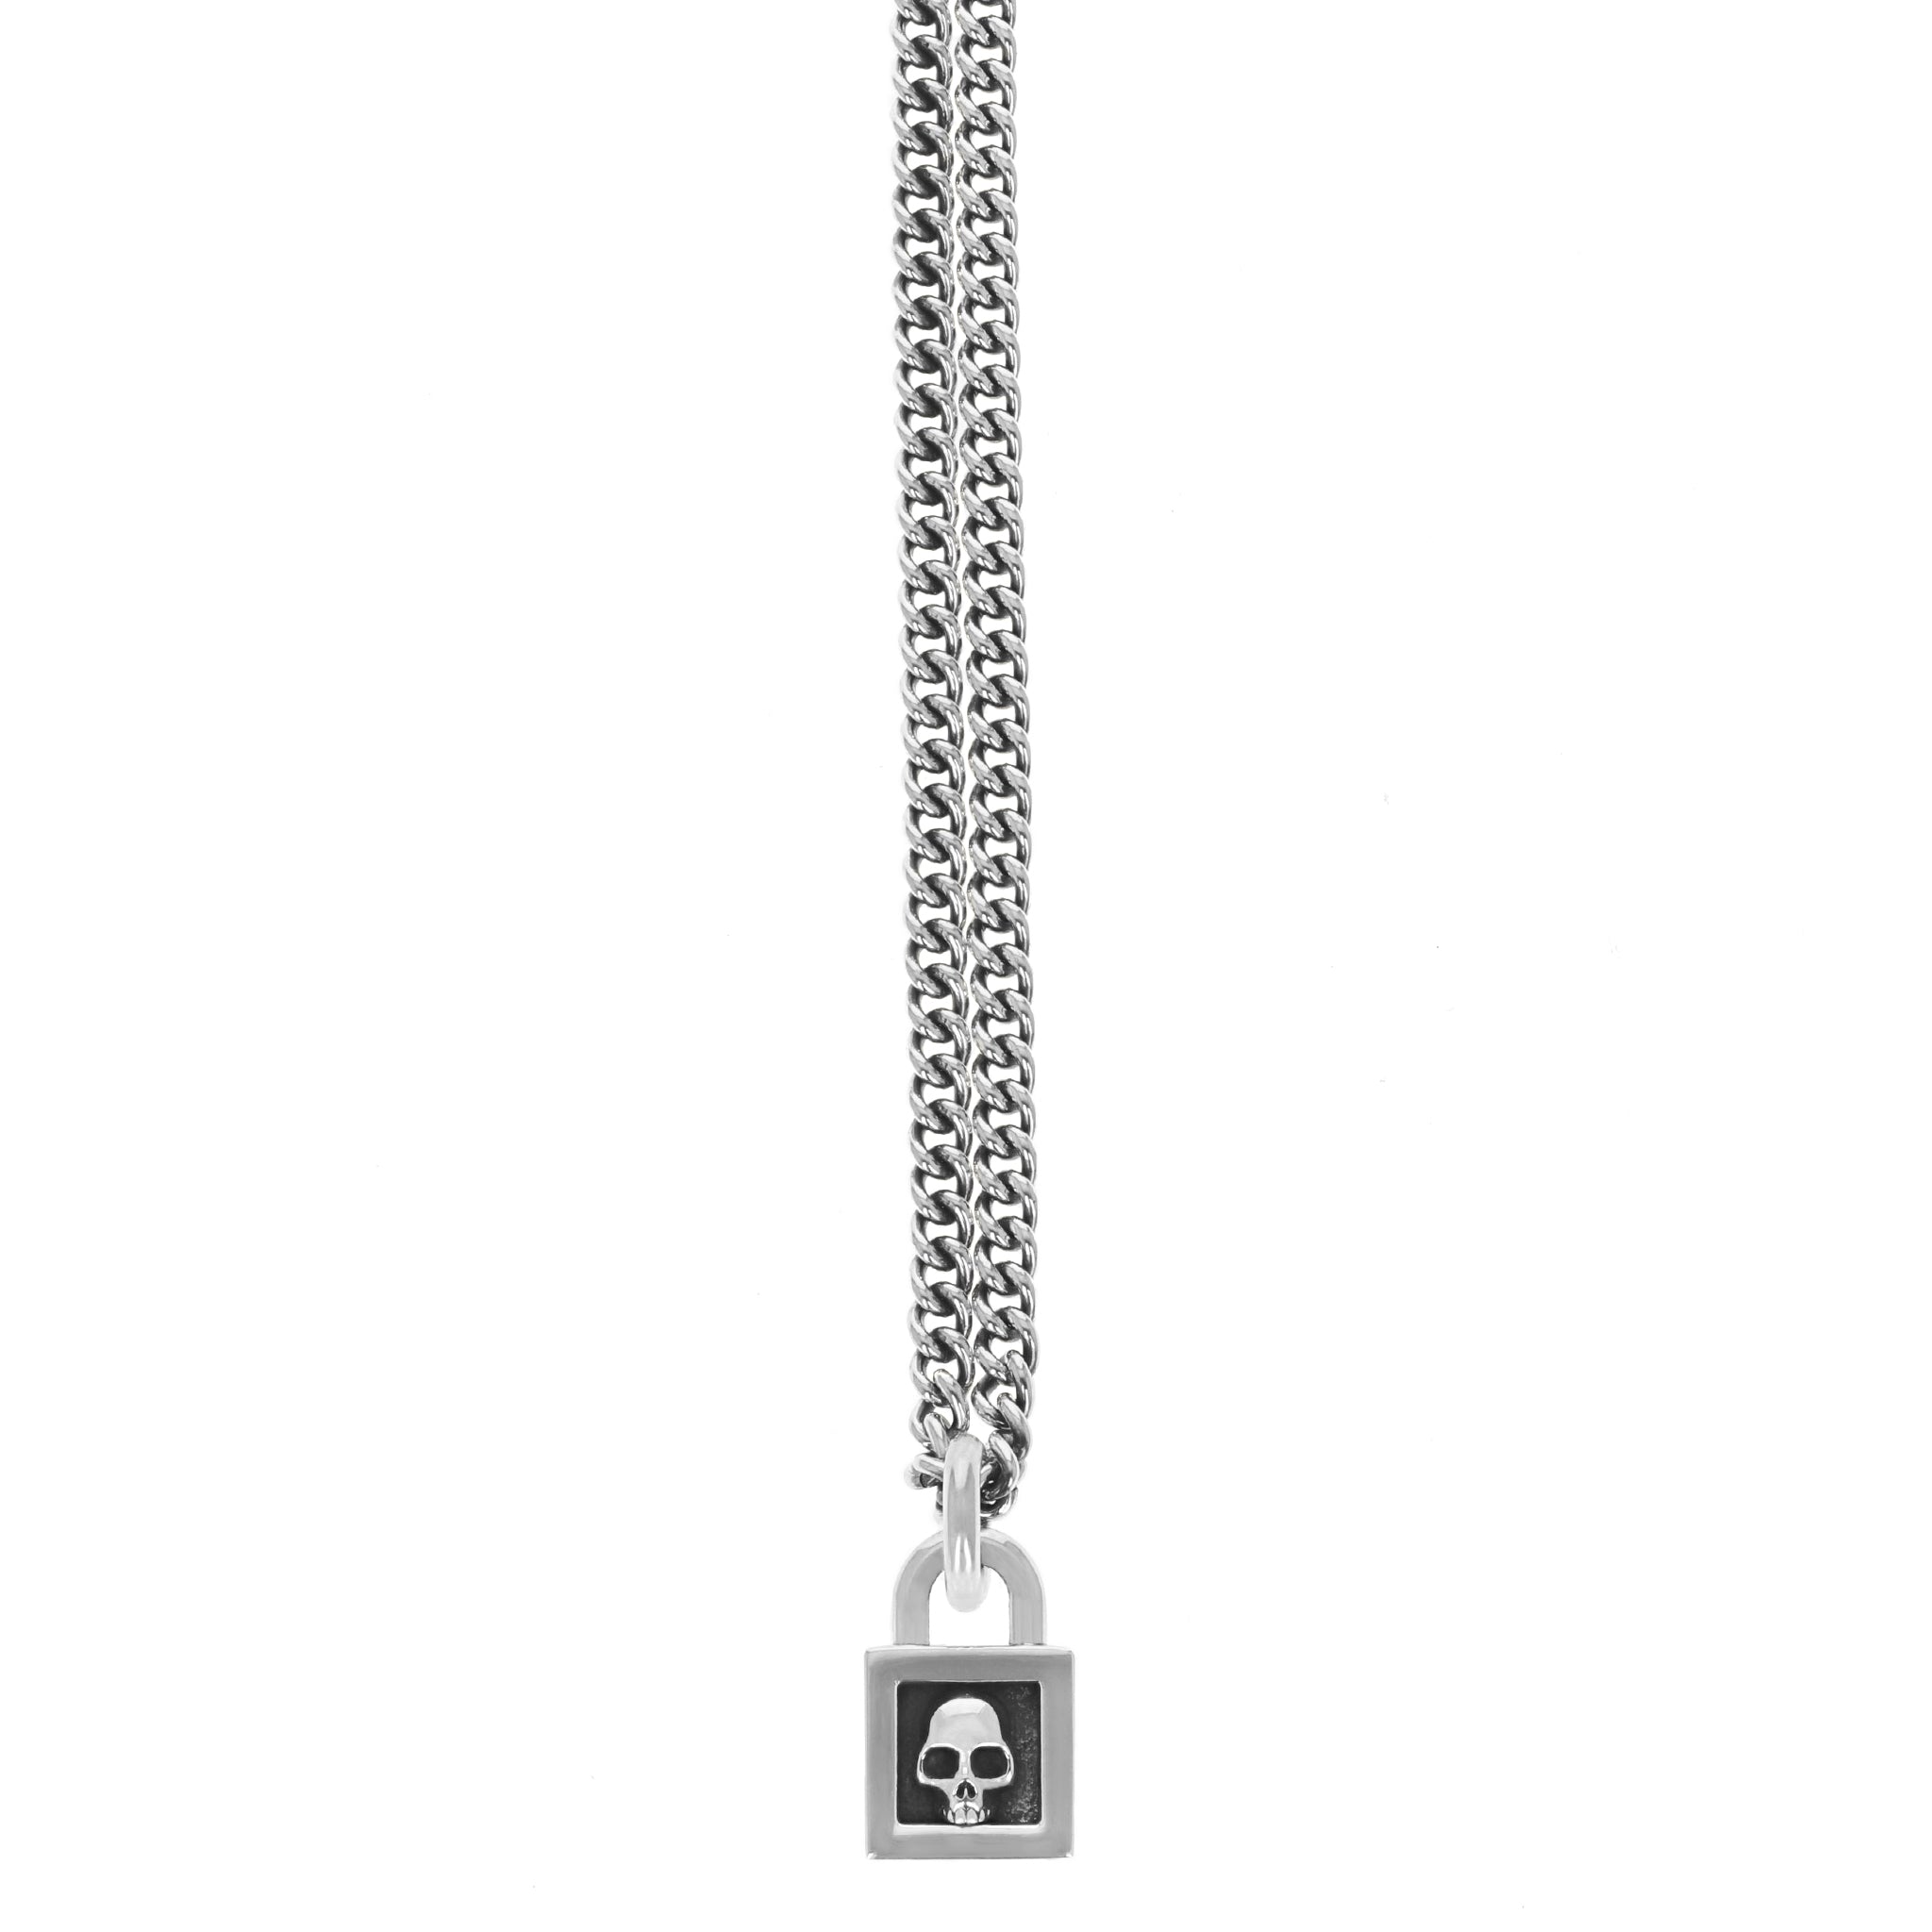 Côtê Caché Lock  Key Chain Necklace in Sterling Silver  Jewellery  Côté  Caché